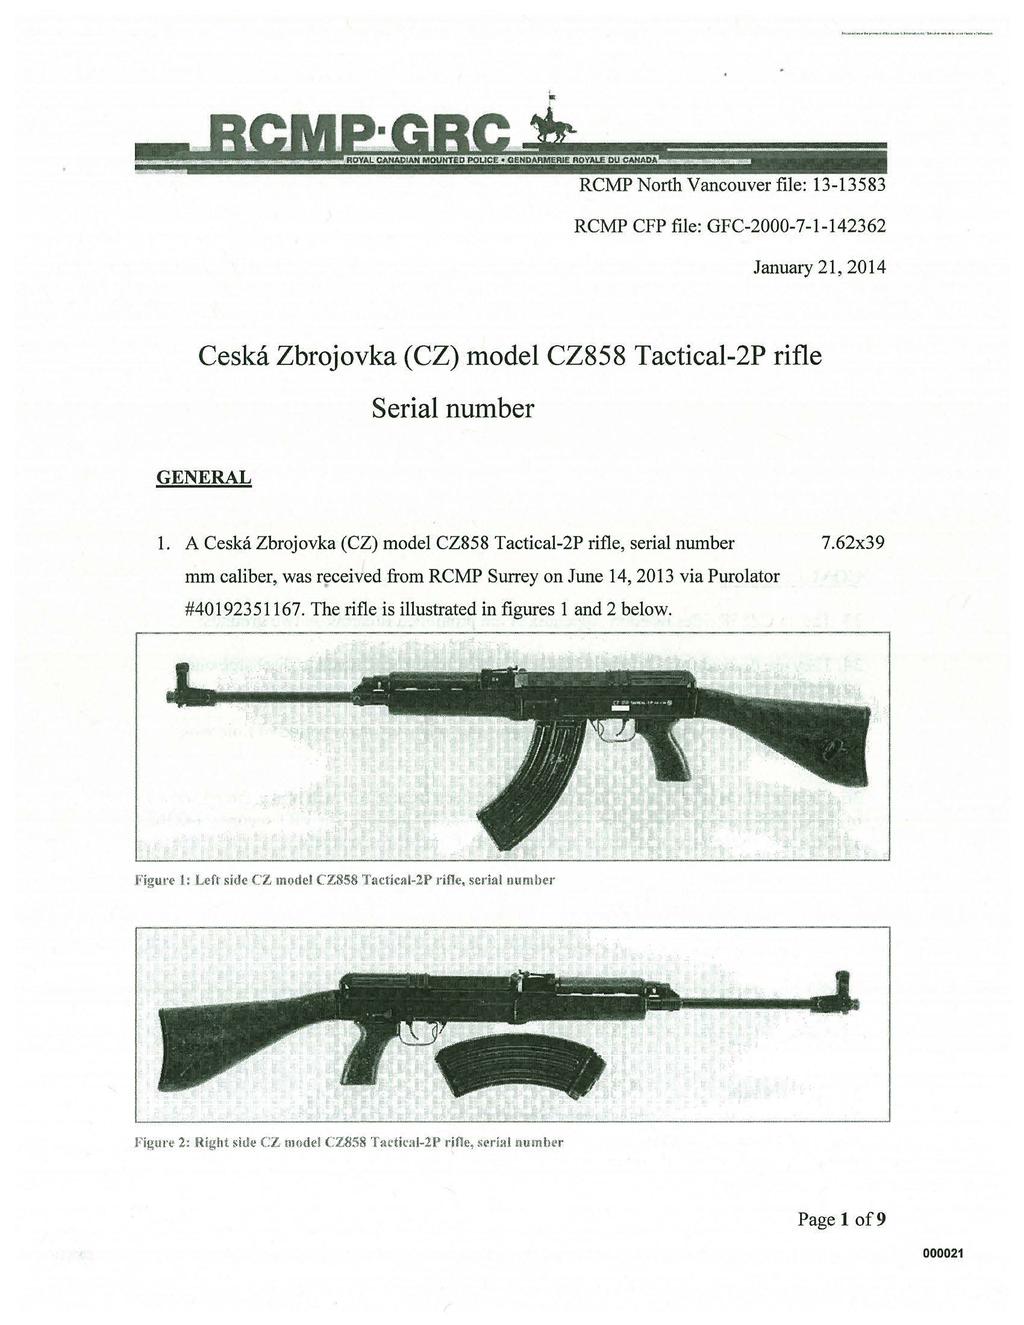 ... RCMP North Vancouver file: 13-13583 RCMP CFP file: GFC-2000-7-1-142362 January 21, 2014 Ceska Zbrojovka (CZ) model CZ858 Tactical-2P rifle Serial number GENERAL 1.